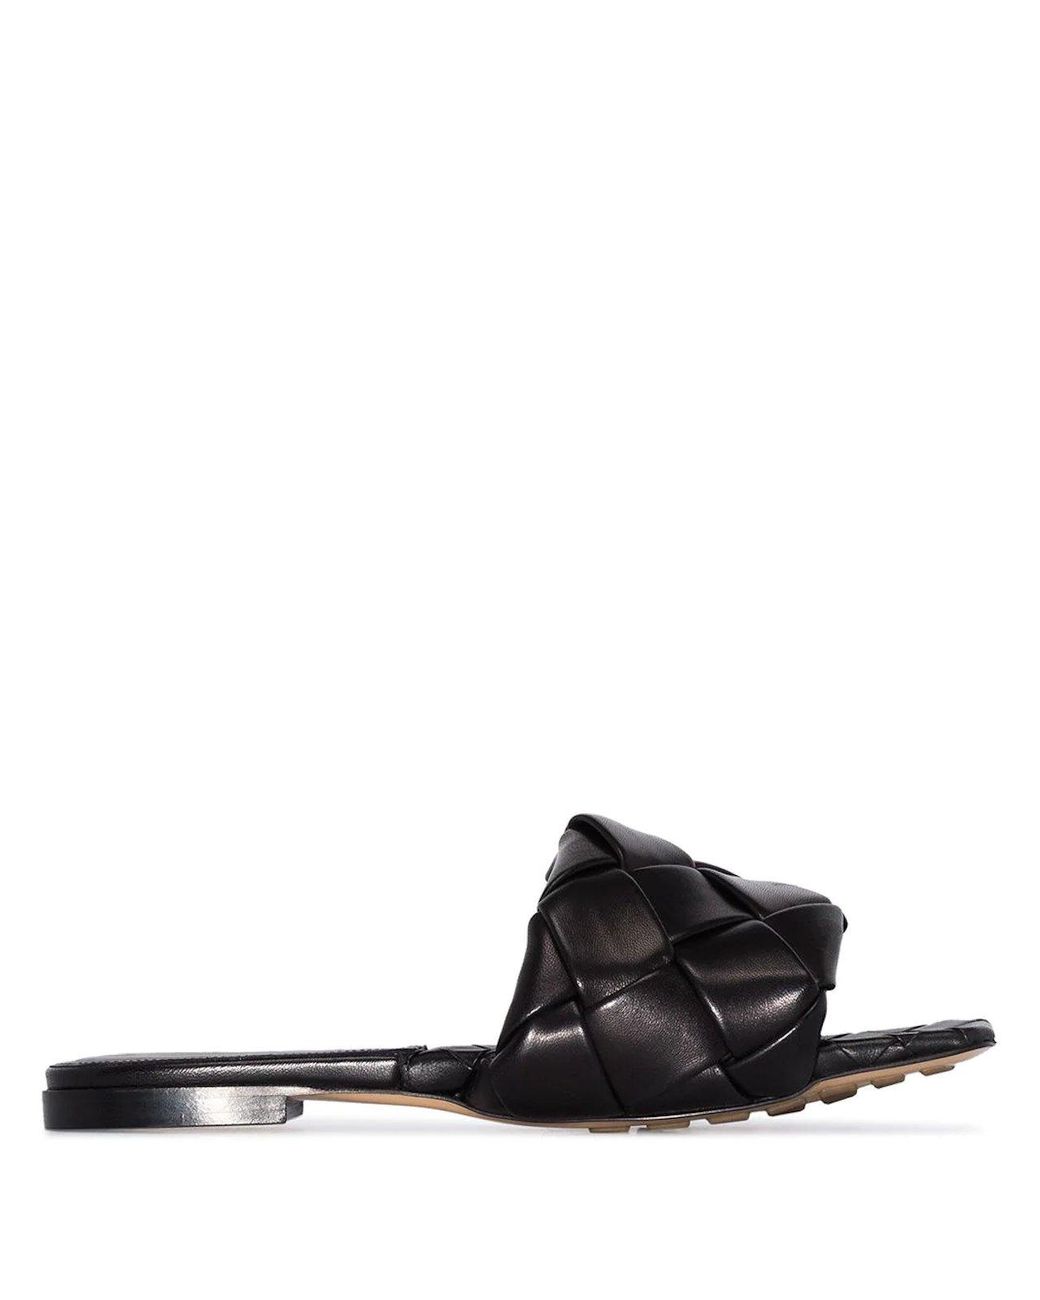 Bottega Veneta Leather Flat Woven Sandals in Black - Lyst